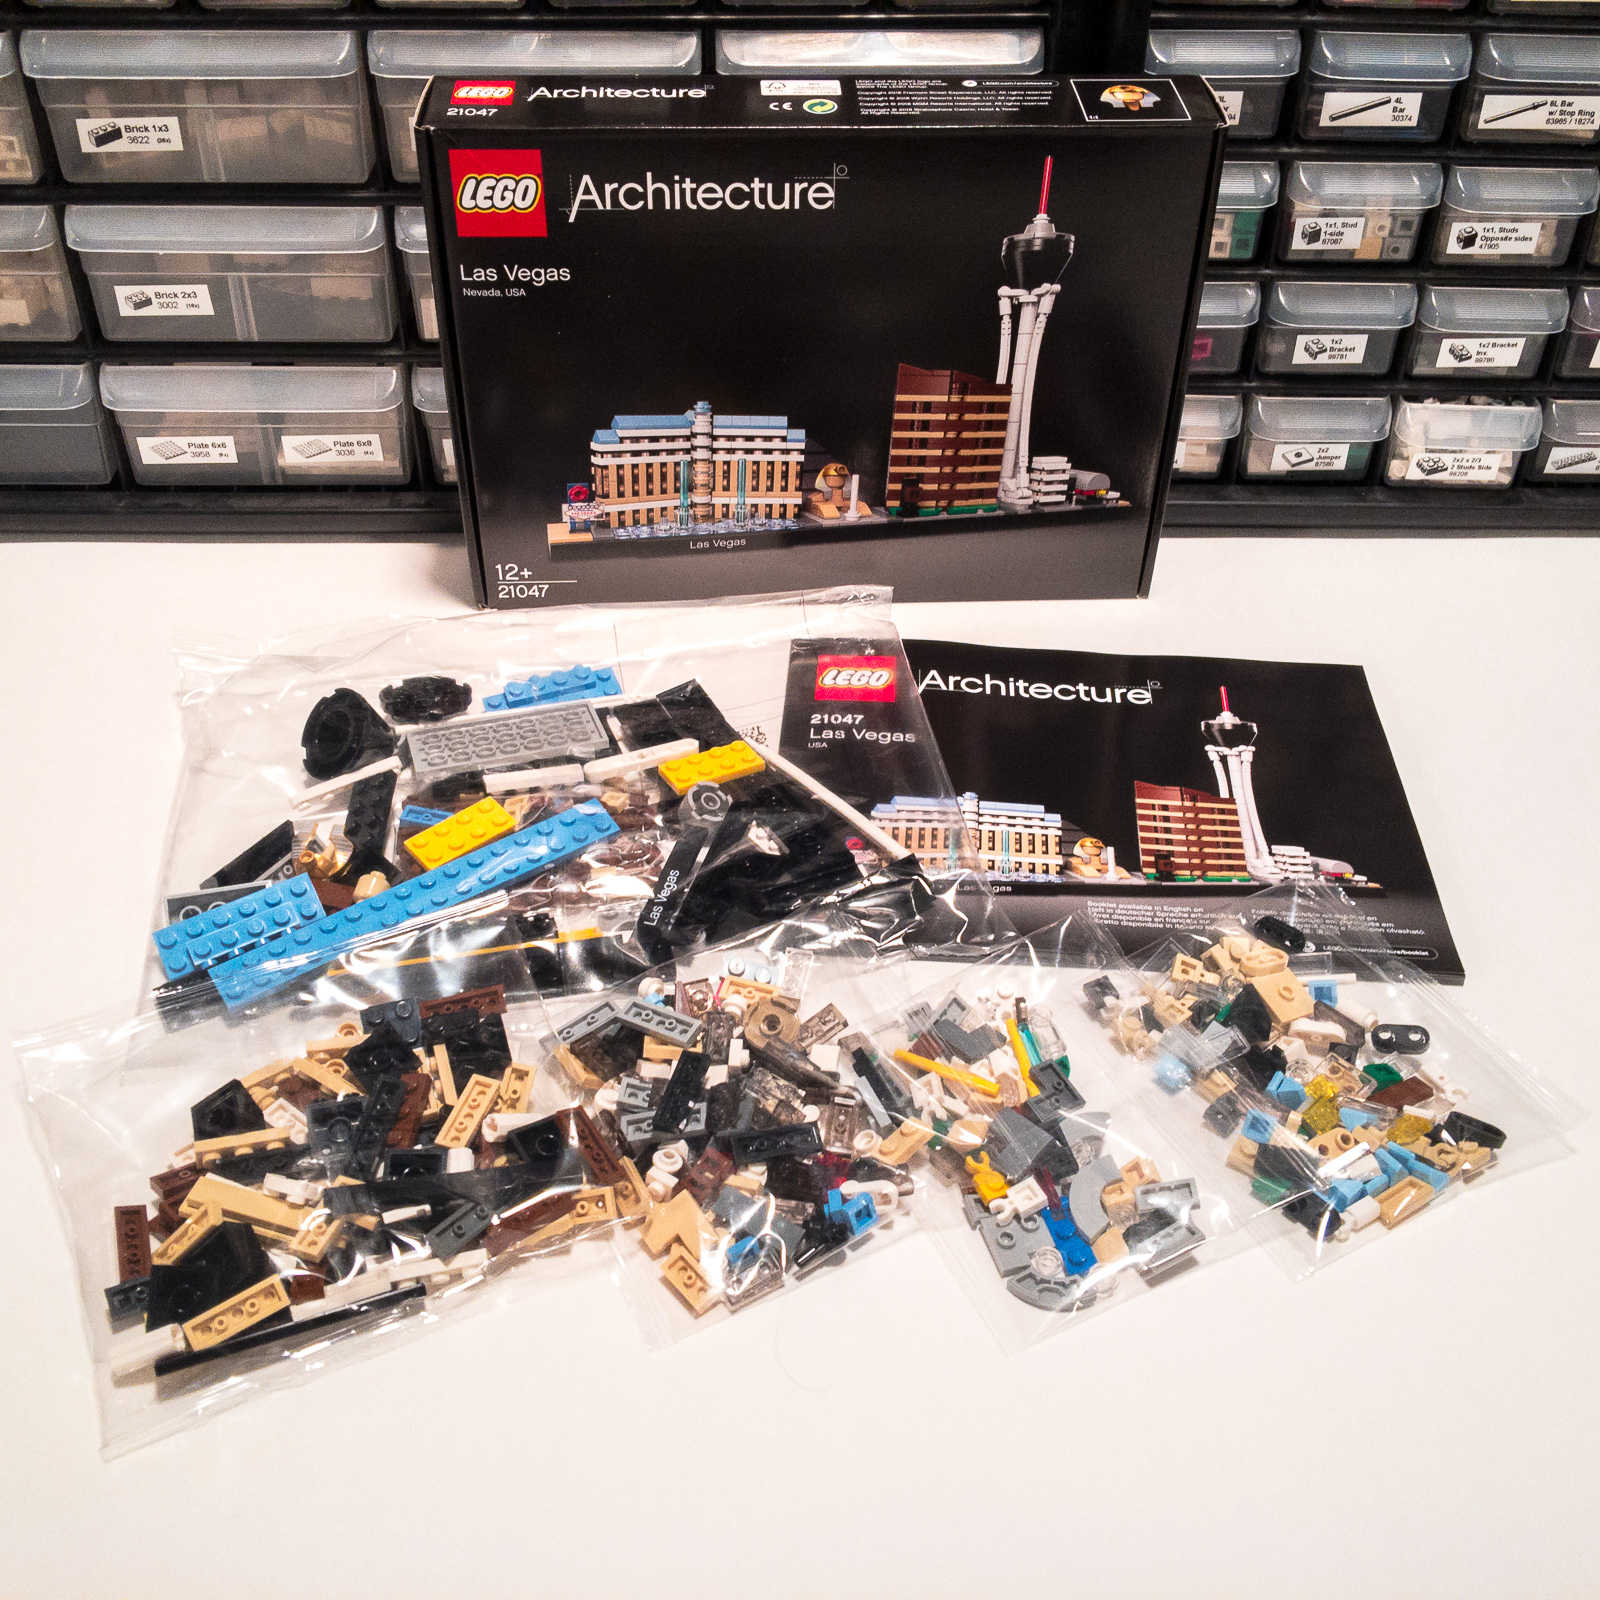 LEGO 21047 Las Vegas Set Parts Inventory and Instructions - LEGO